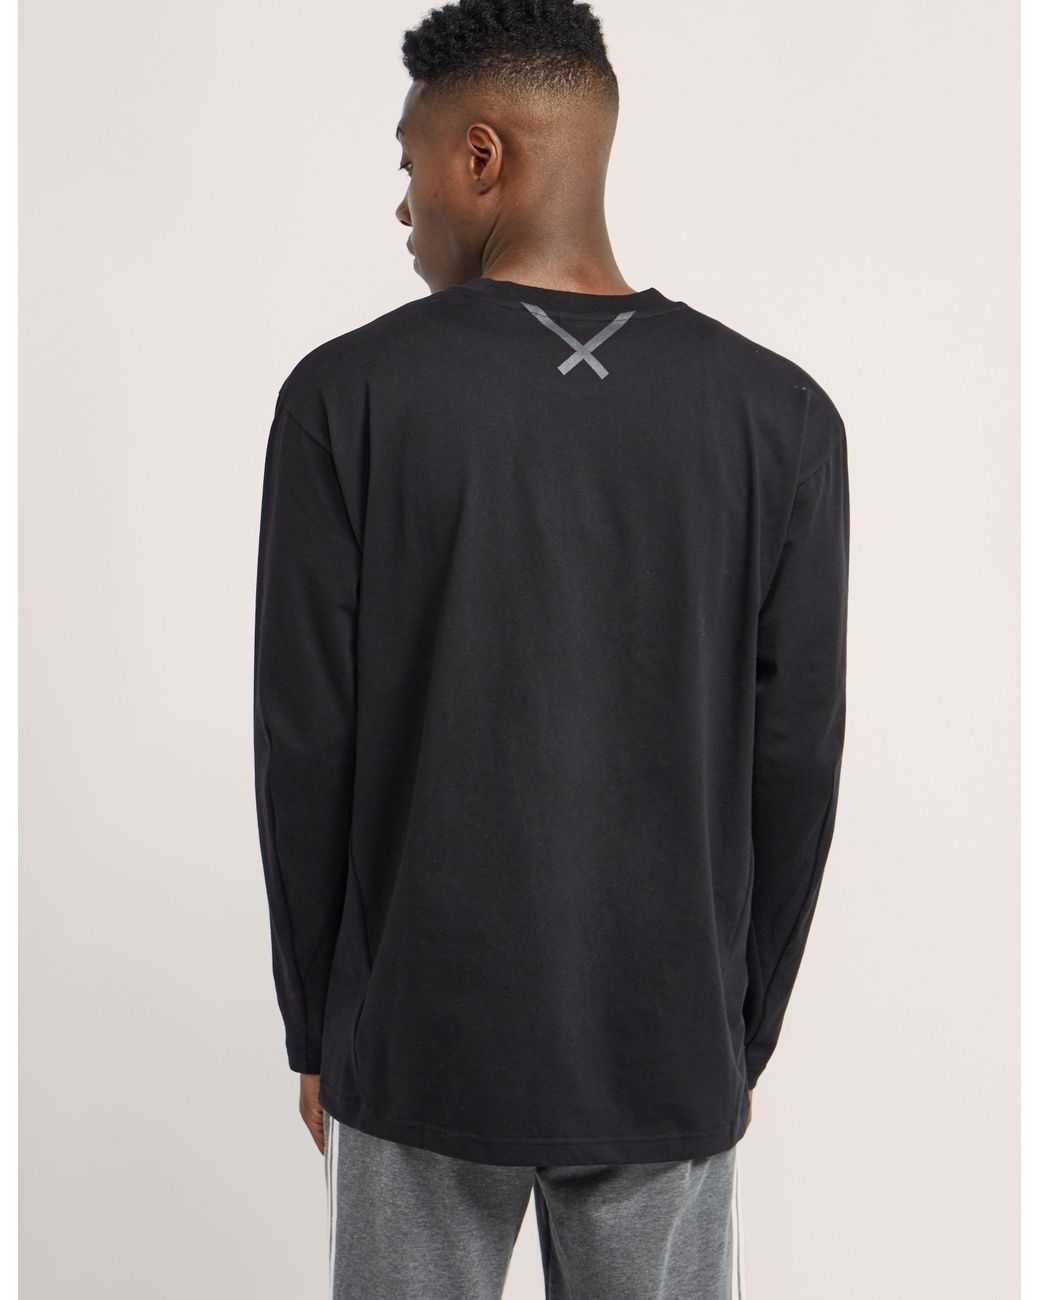 adidas Originals Xbyo Long Sleeve T-shirt in Black for Men | Lyst